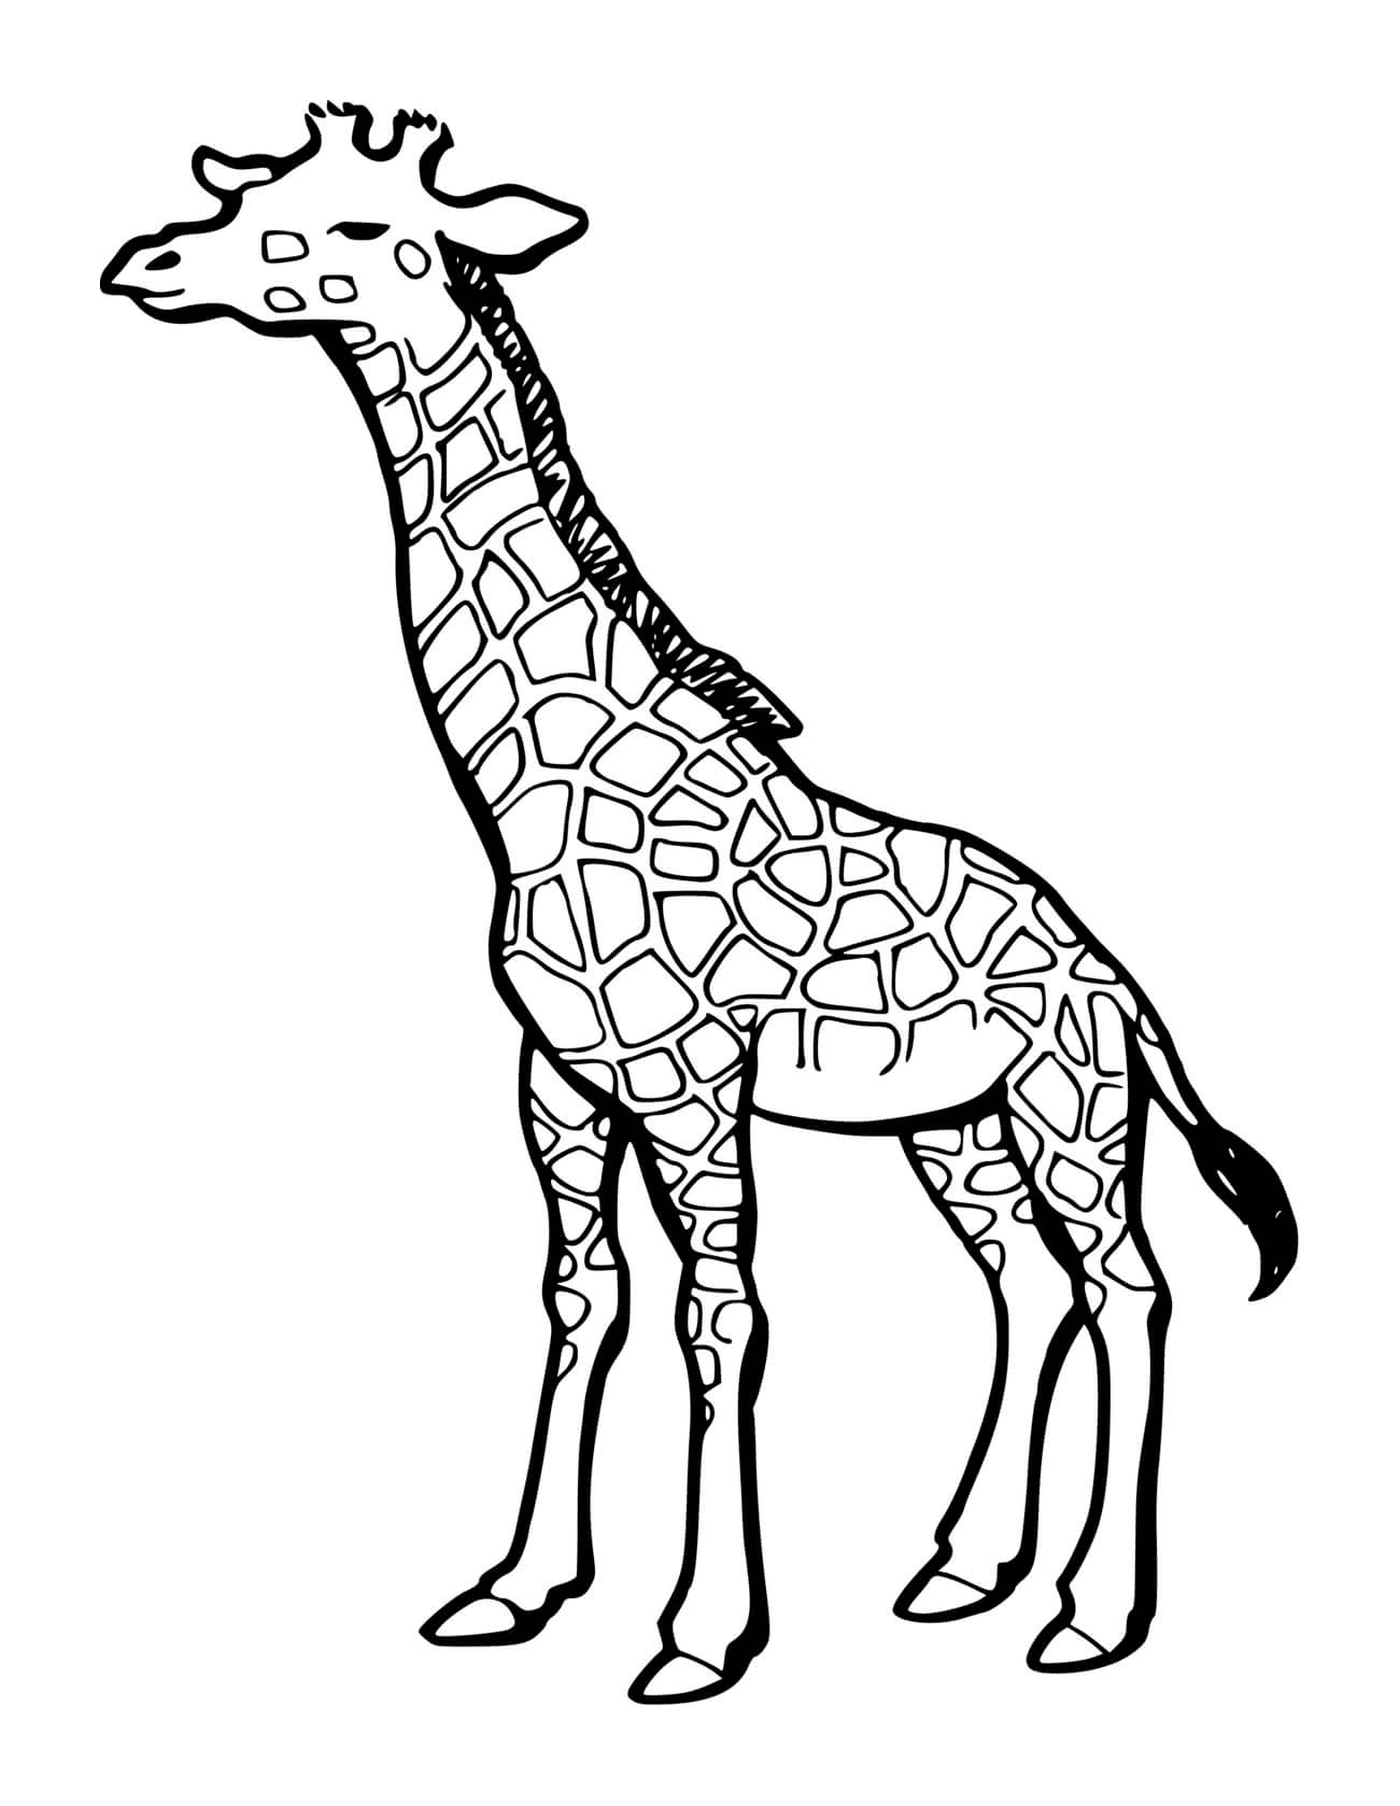  Parte do corpo de uma girafa 